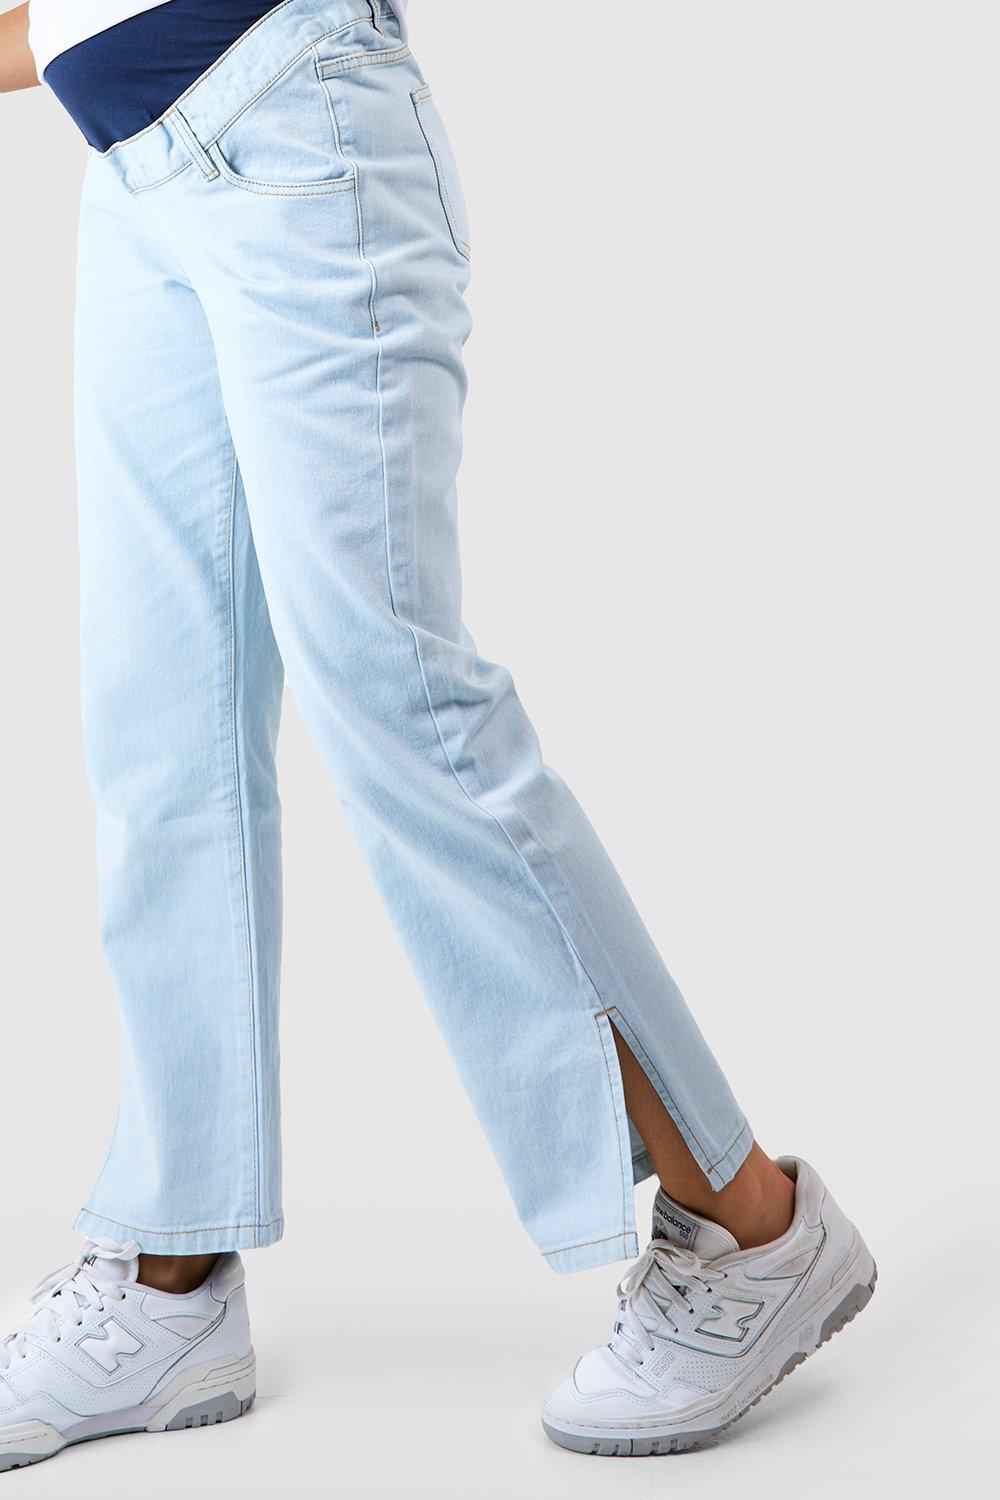 https://media.boohoo.com/i/boohoo/gzz64812_bleach%20wash_xl_3/female-bleach%20wash-maternity-over-bump-split-straight-leg-jeans